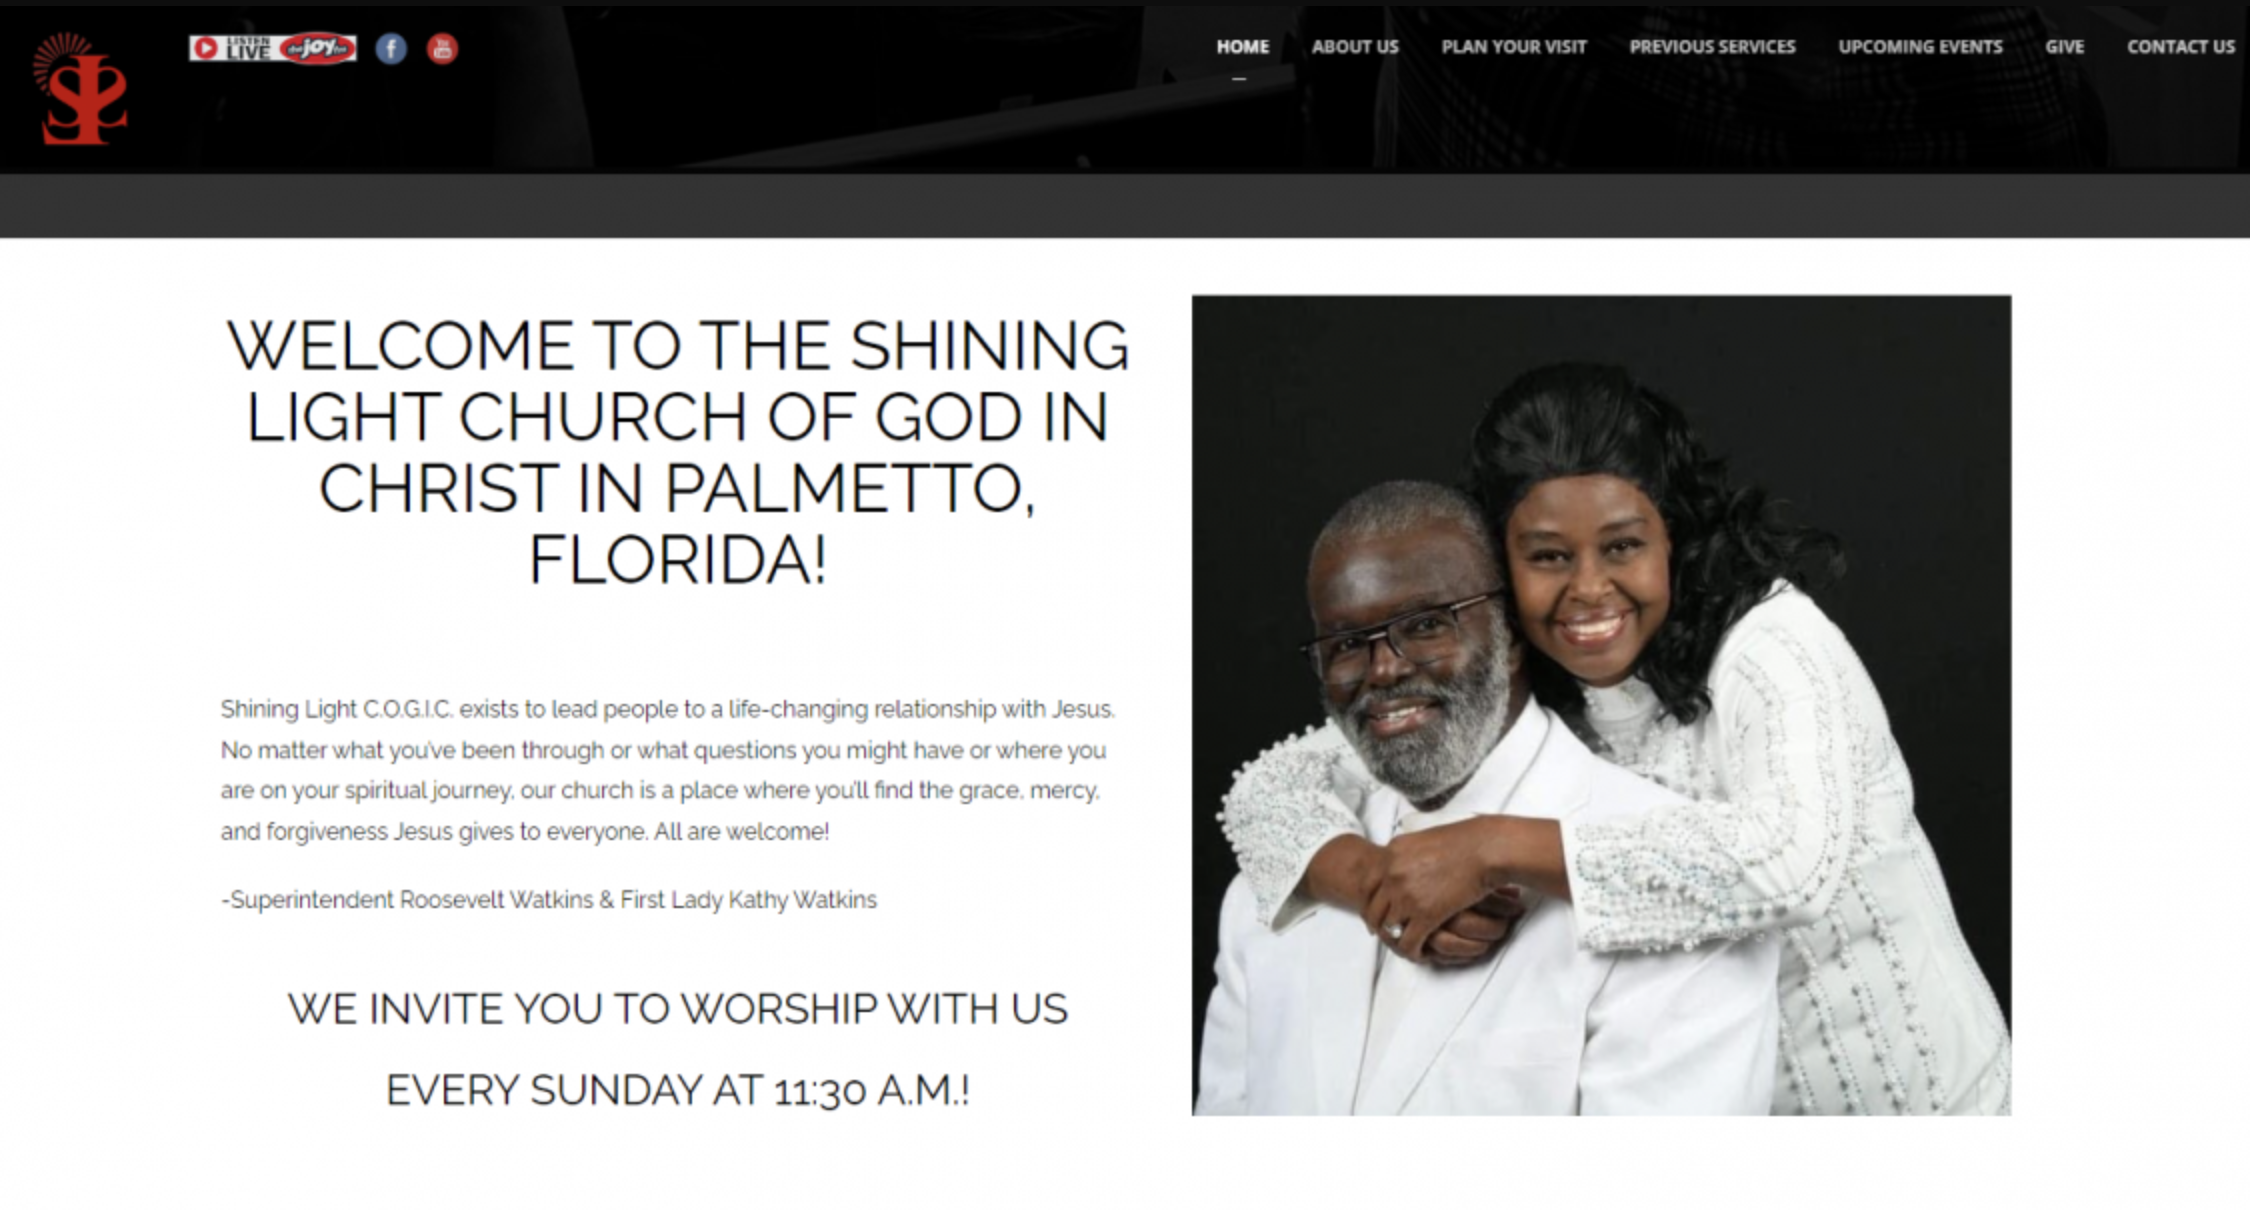 Build a church website like Shining Light C.O.G.I.C.